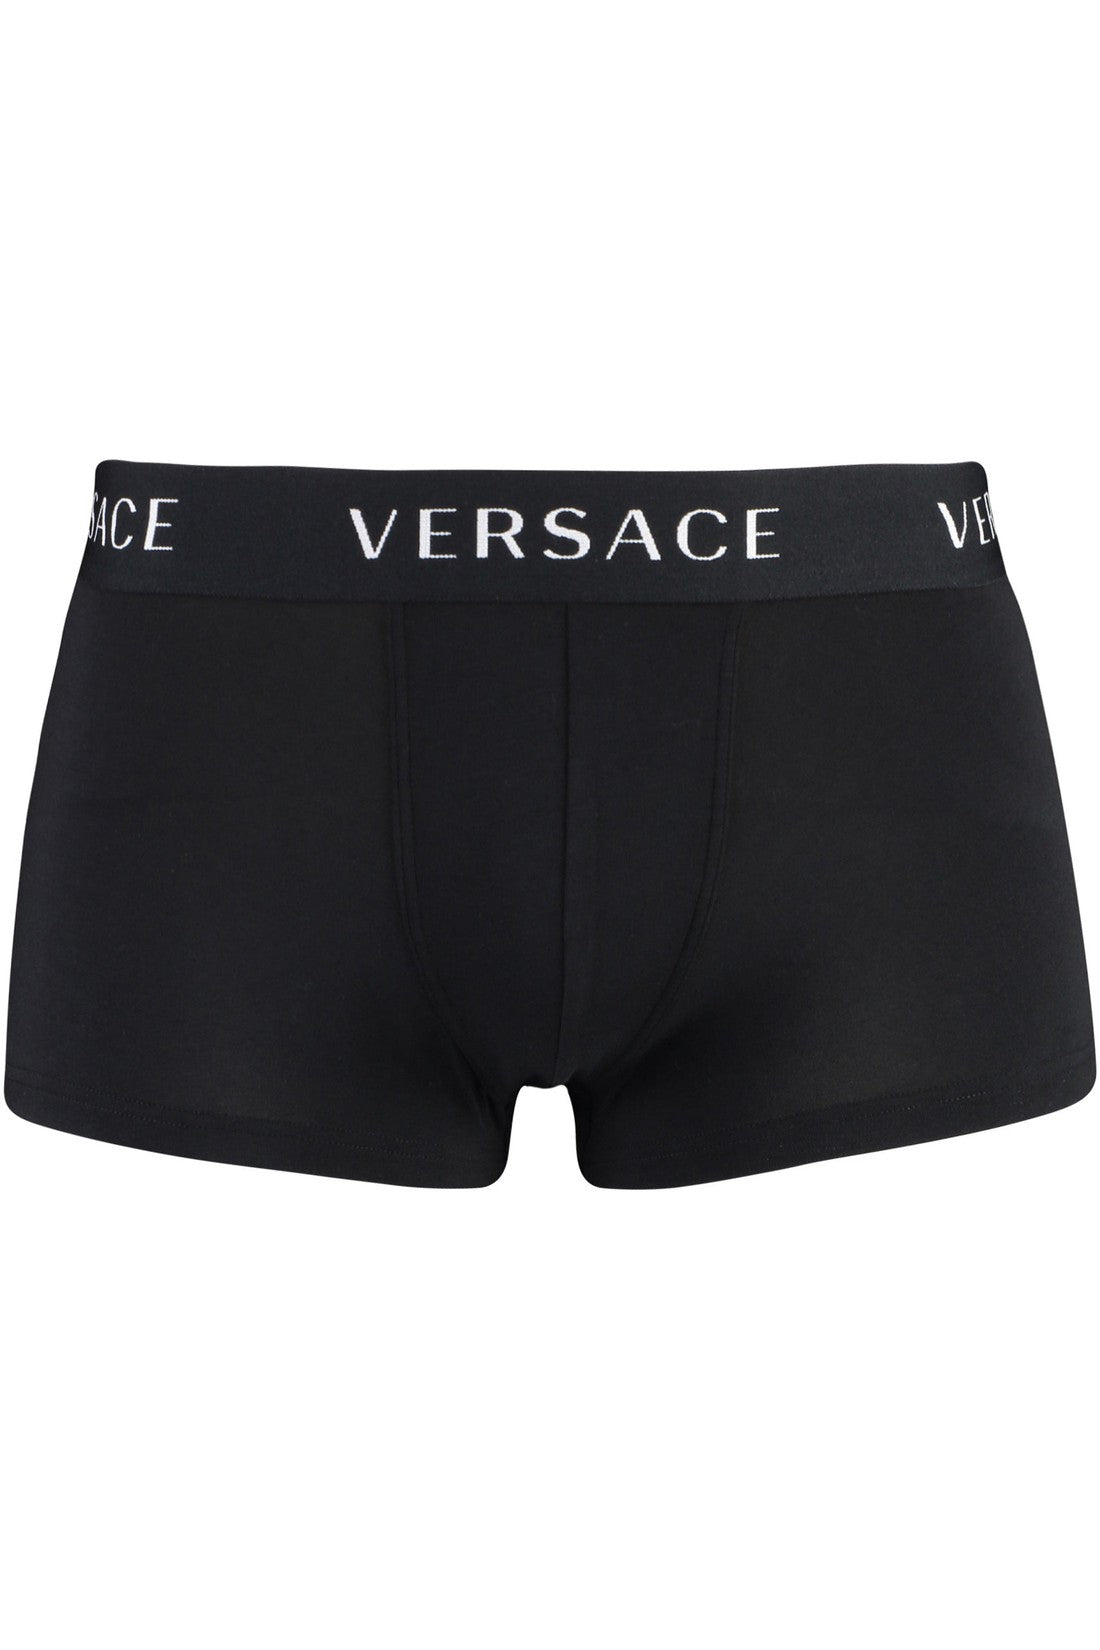 Versace-OUTLET-SALE-Set of three boxer-ARCHIVIST